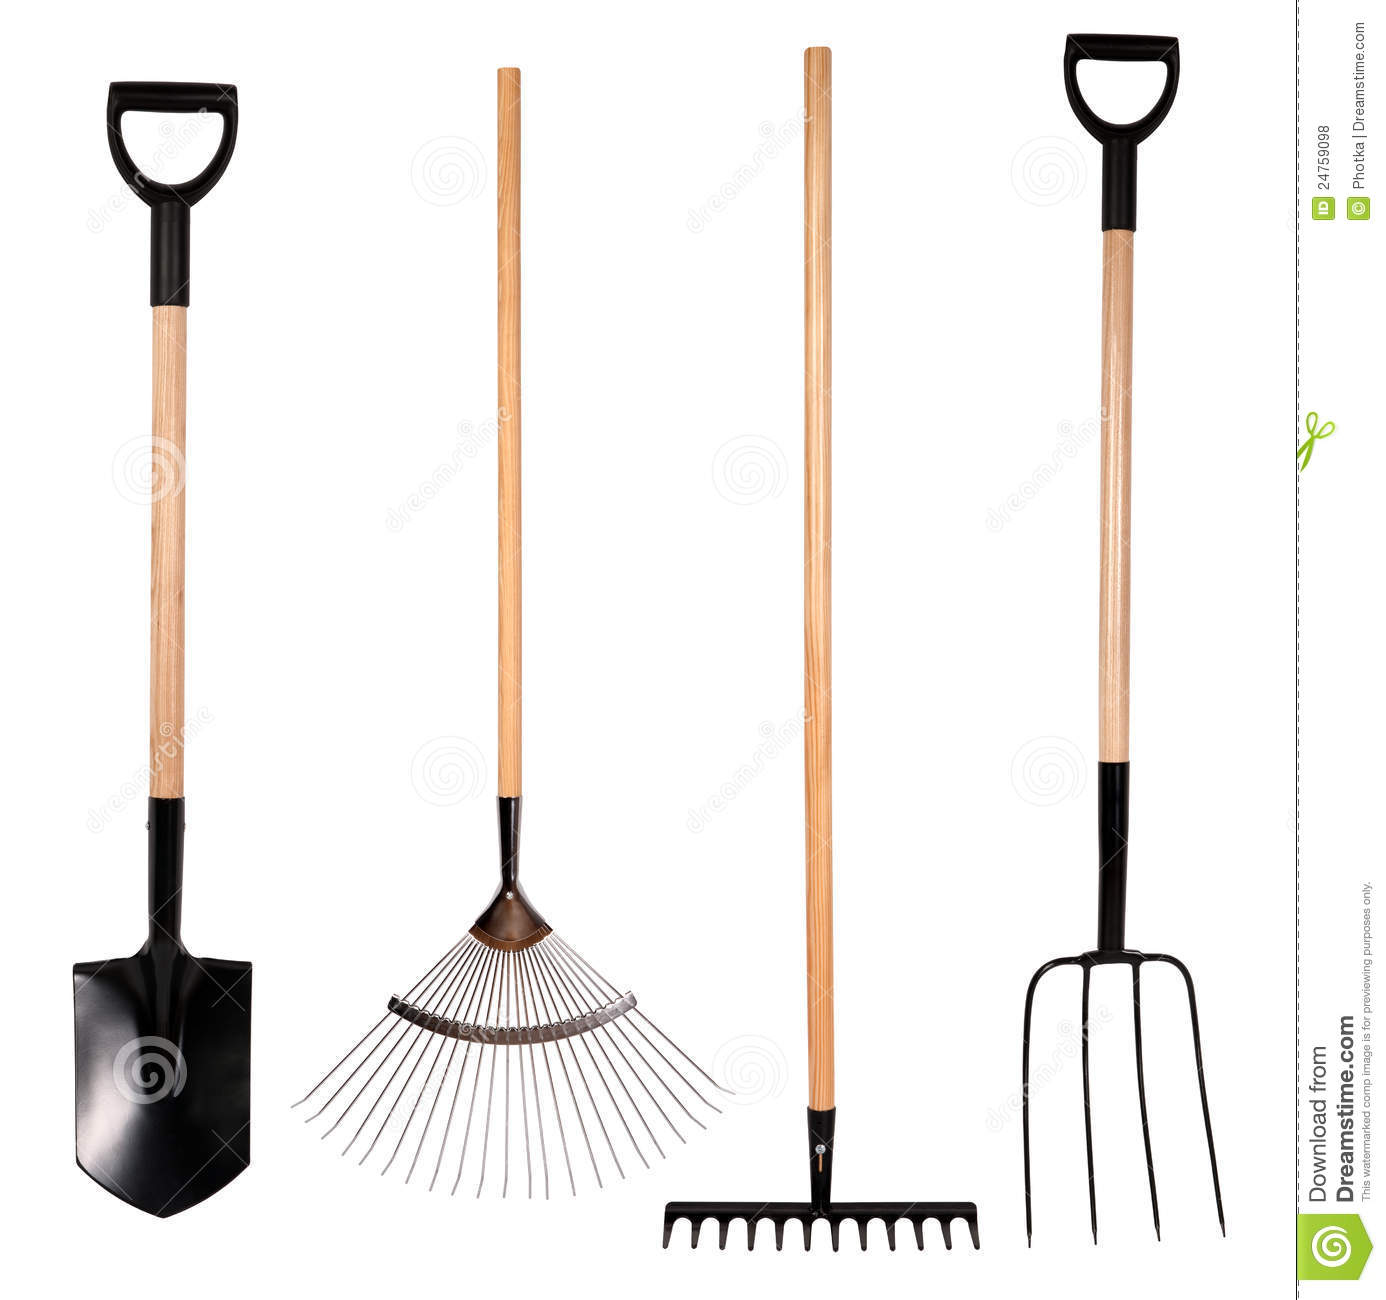 More Similar Stock Images Of   Gardening Tools Spade Fork And Rake